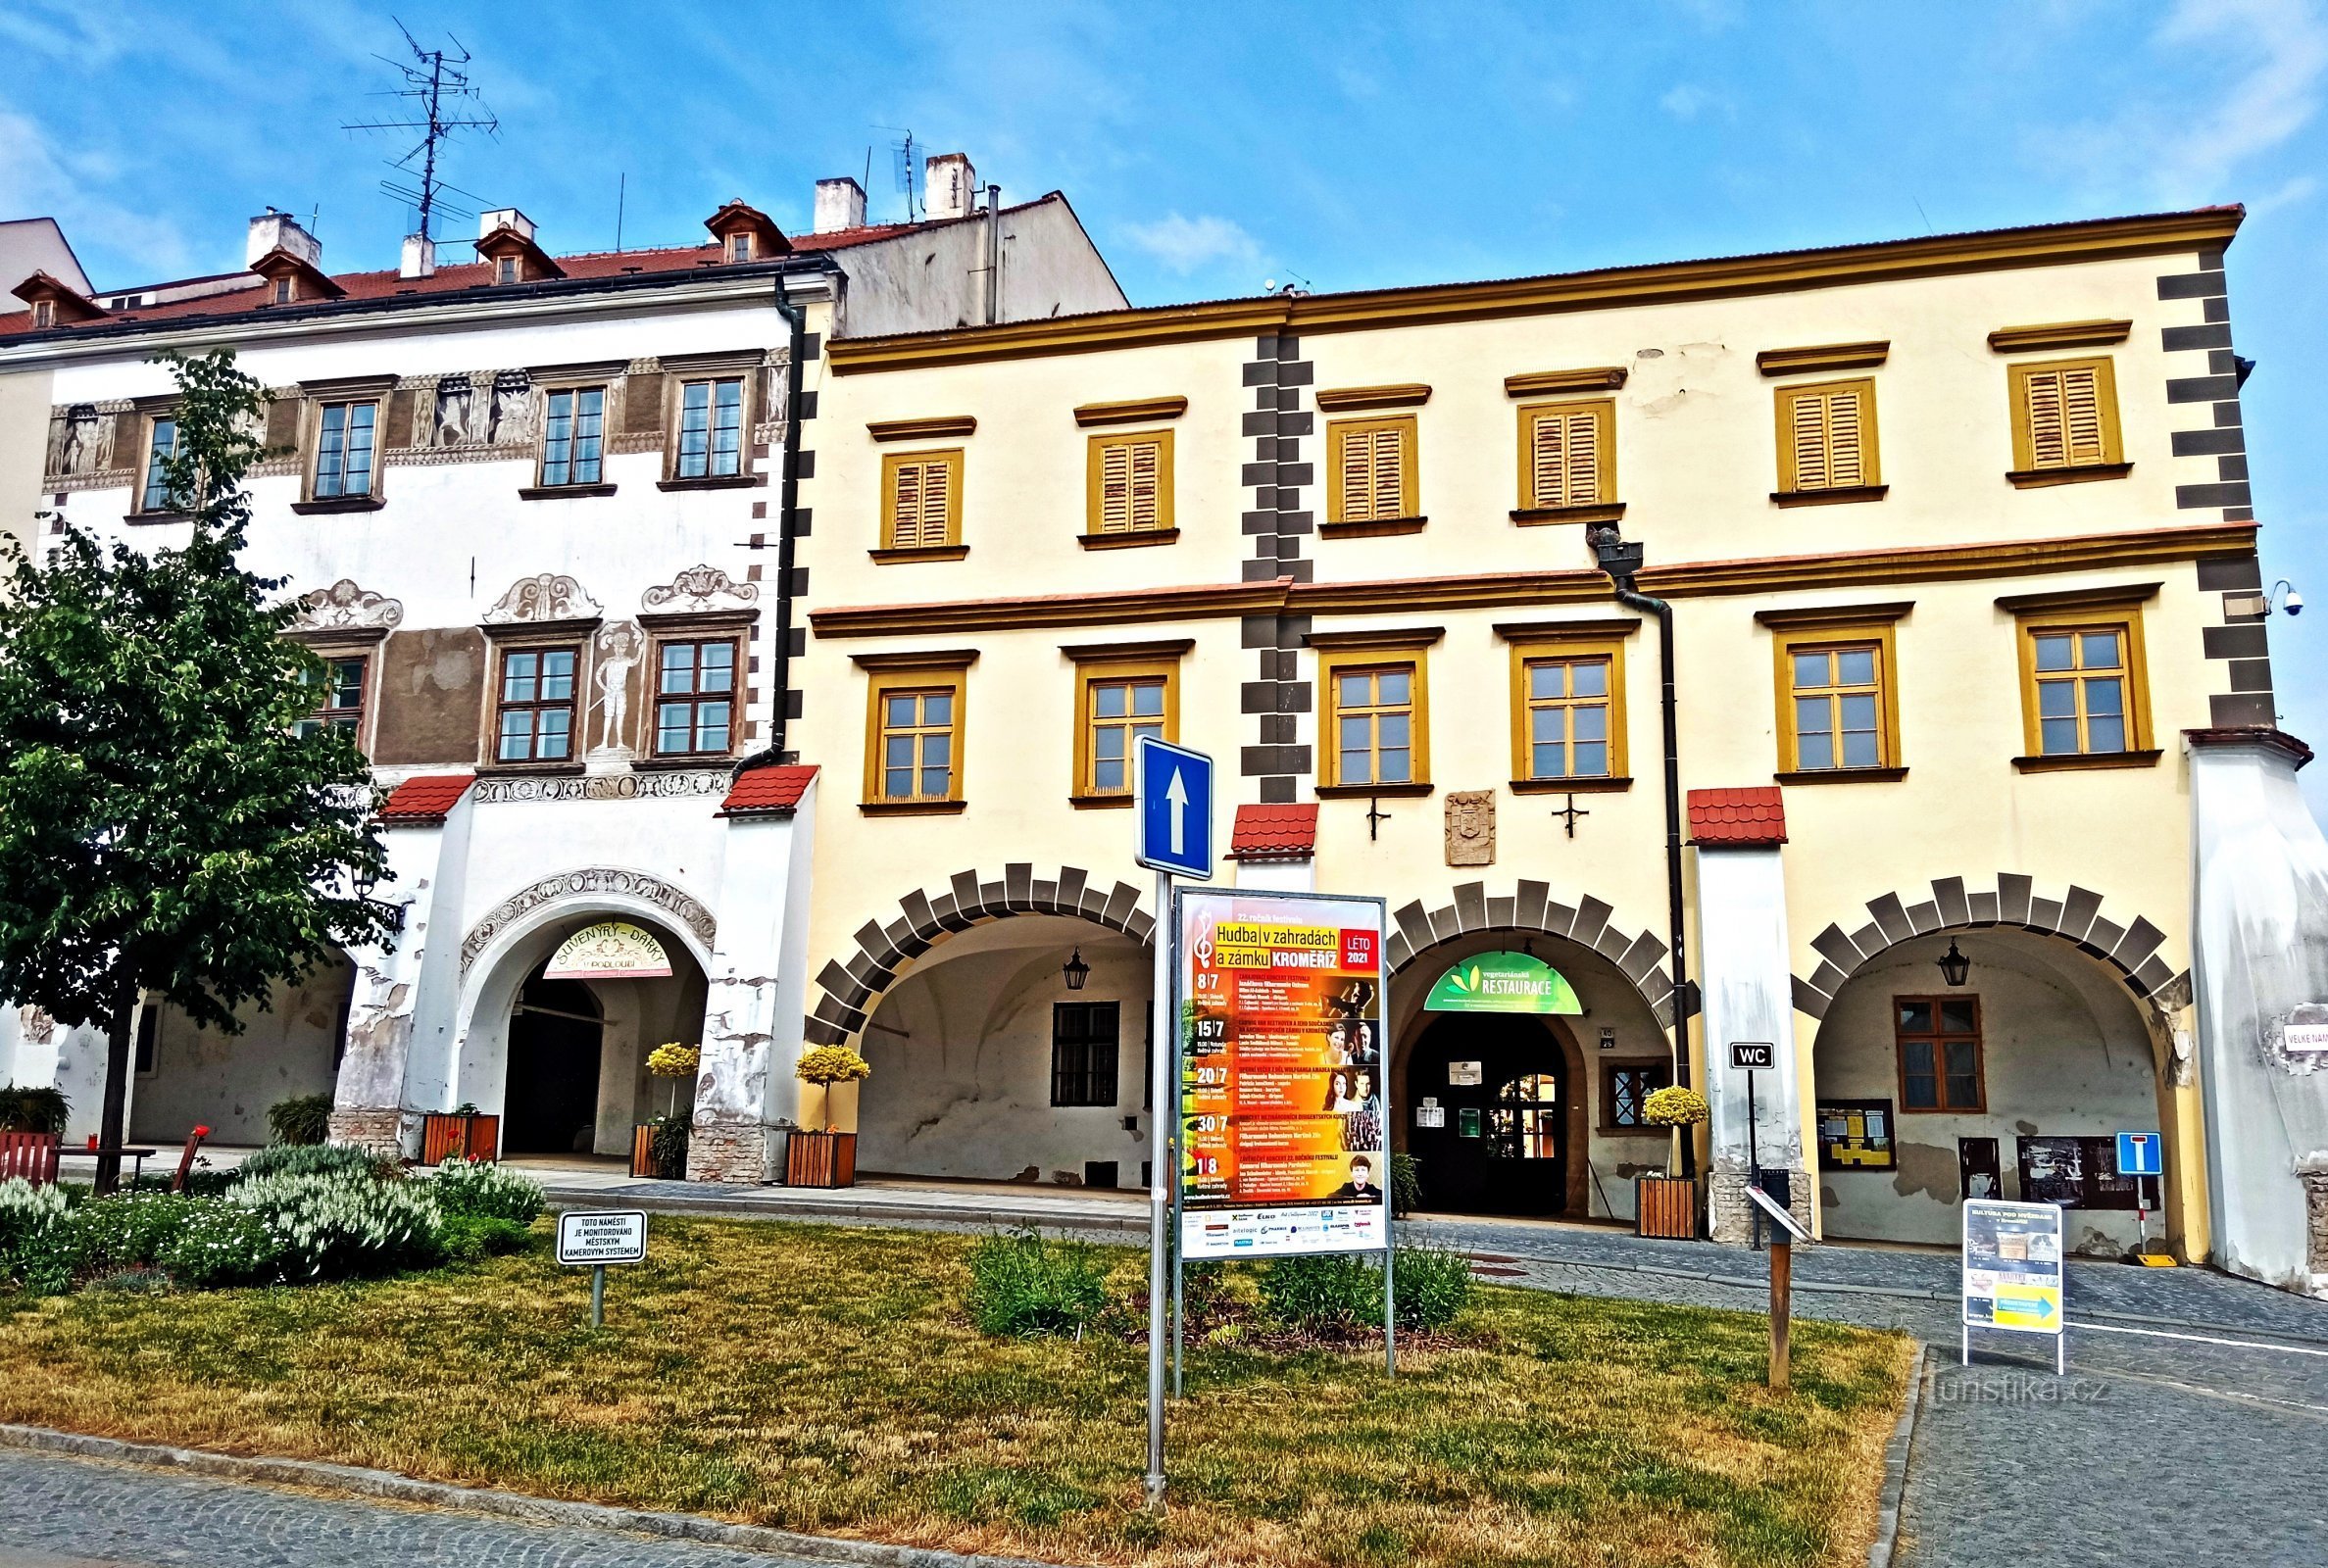 Μια βόλτα στο Velké náměstí στο Kroměříž